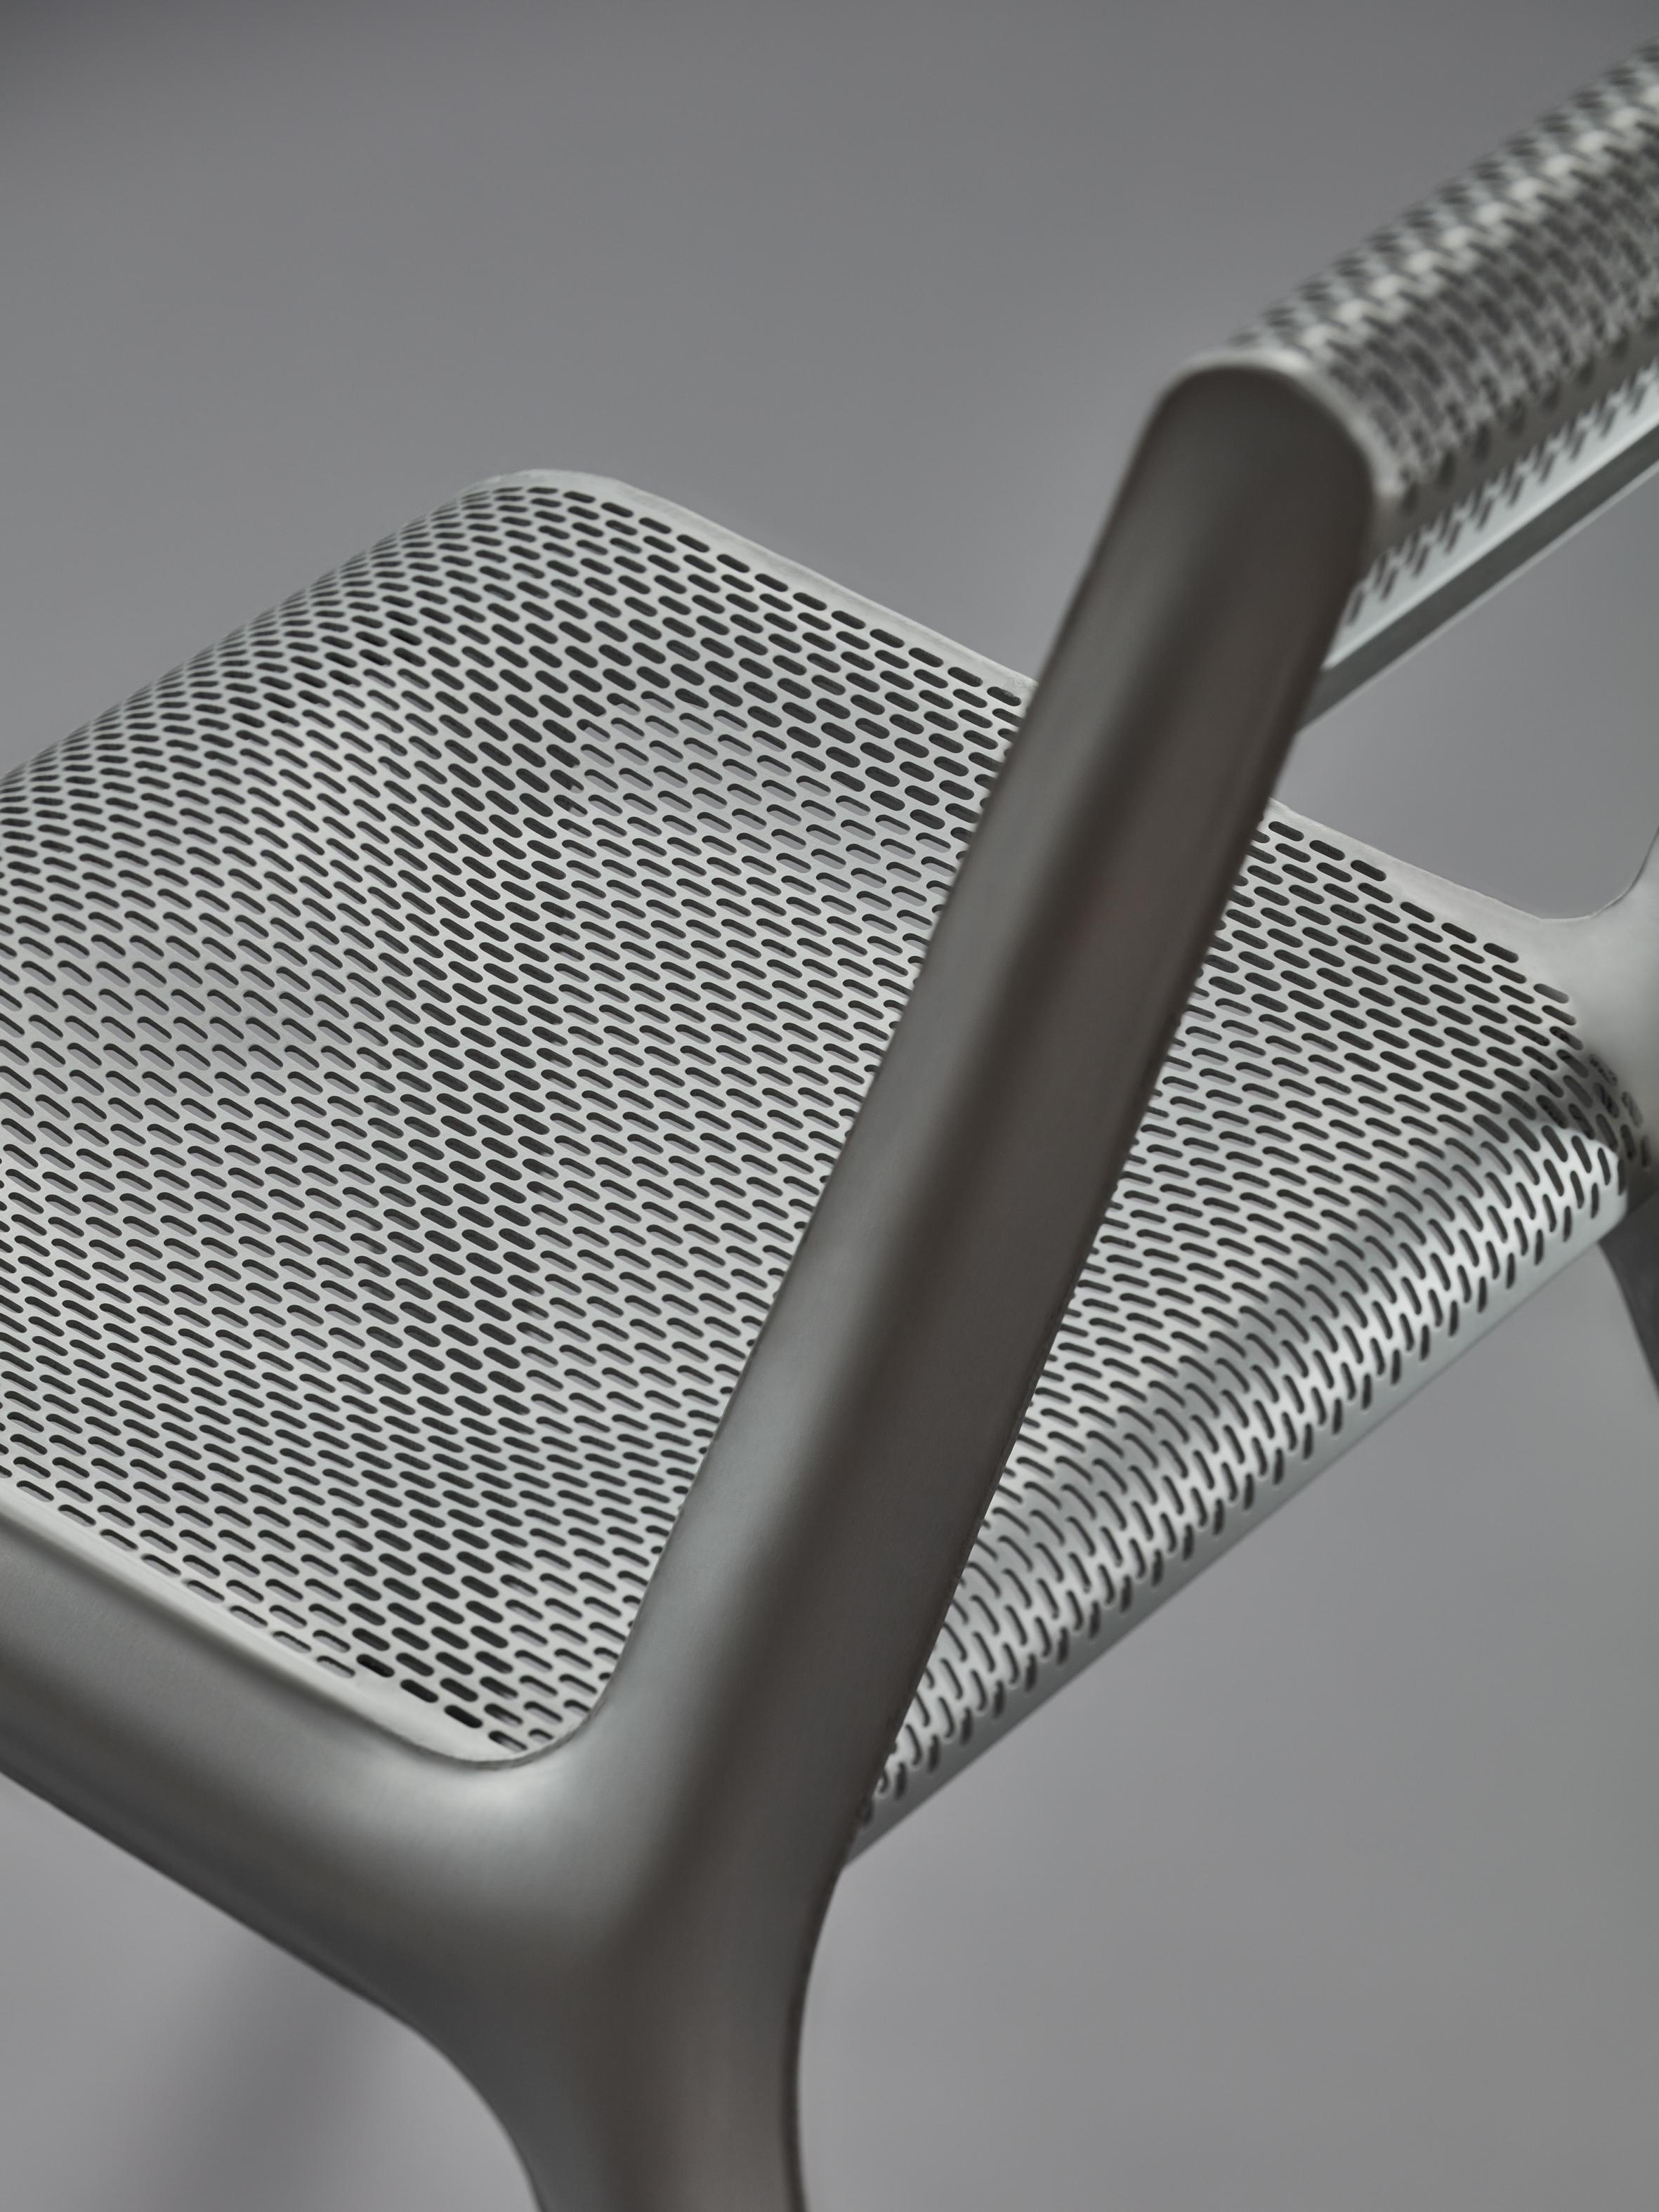 Natural Anodic Ultraleggera Chair by Zieta For Sale 1